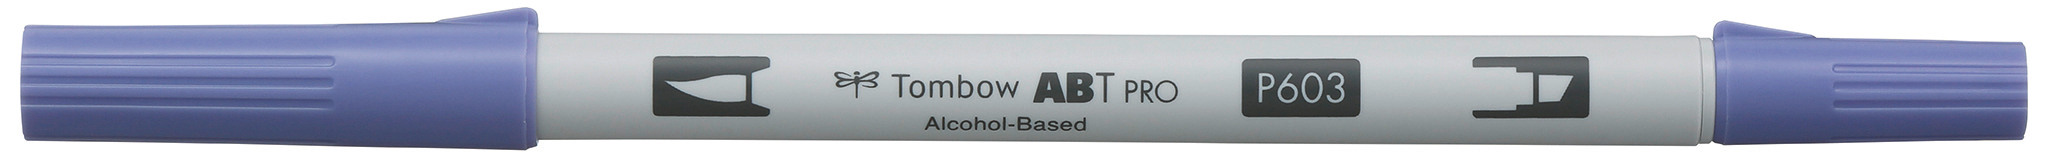 TOMBOW Dual Brush Pen ABT PRO ABTP-603 periwinkle periwinkle